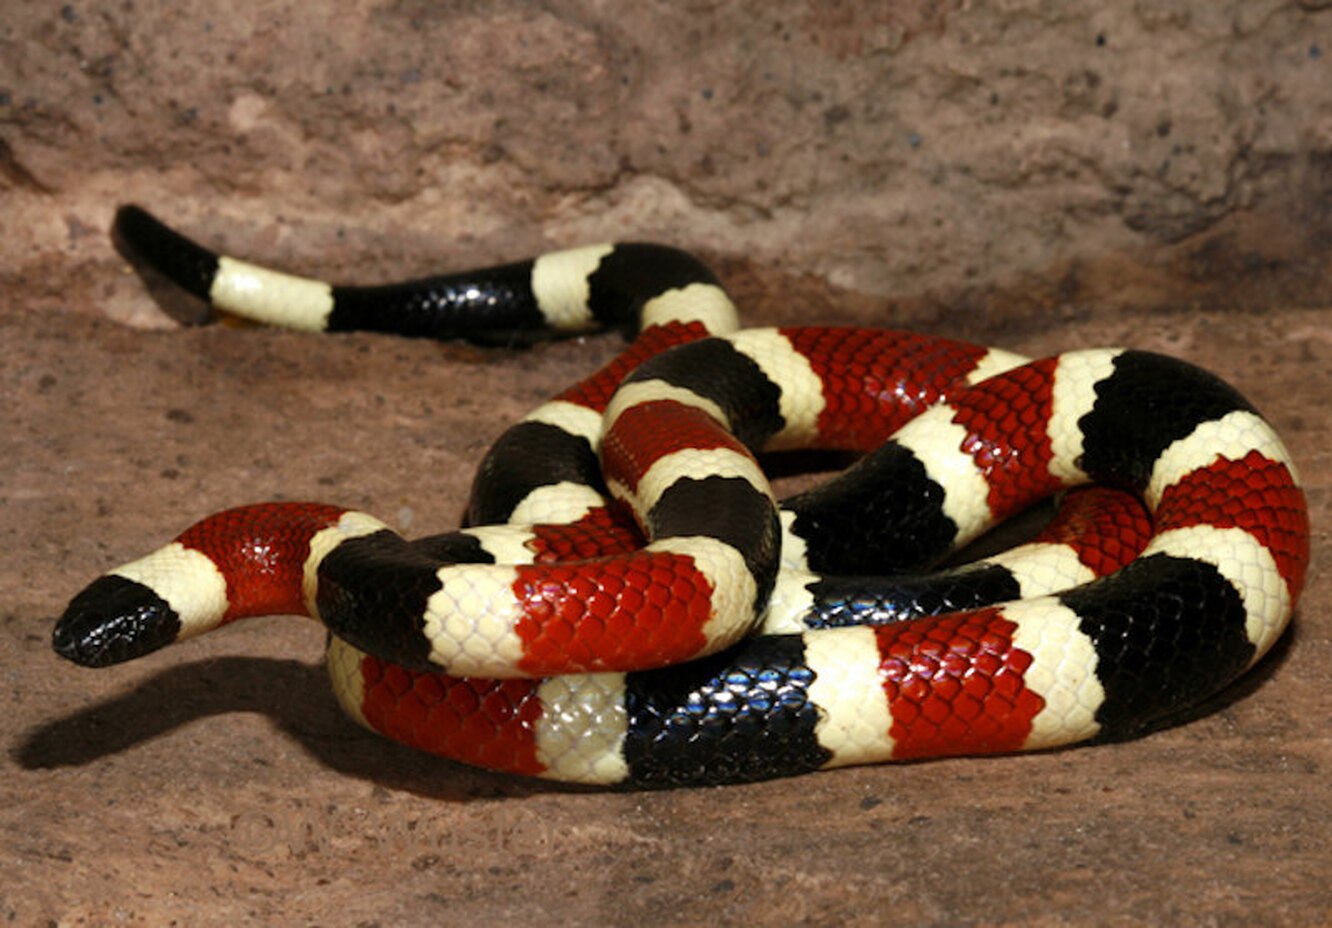 Черно красно белые змеи